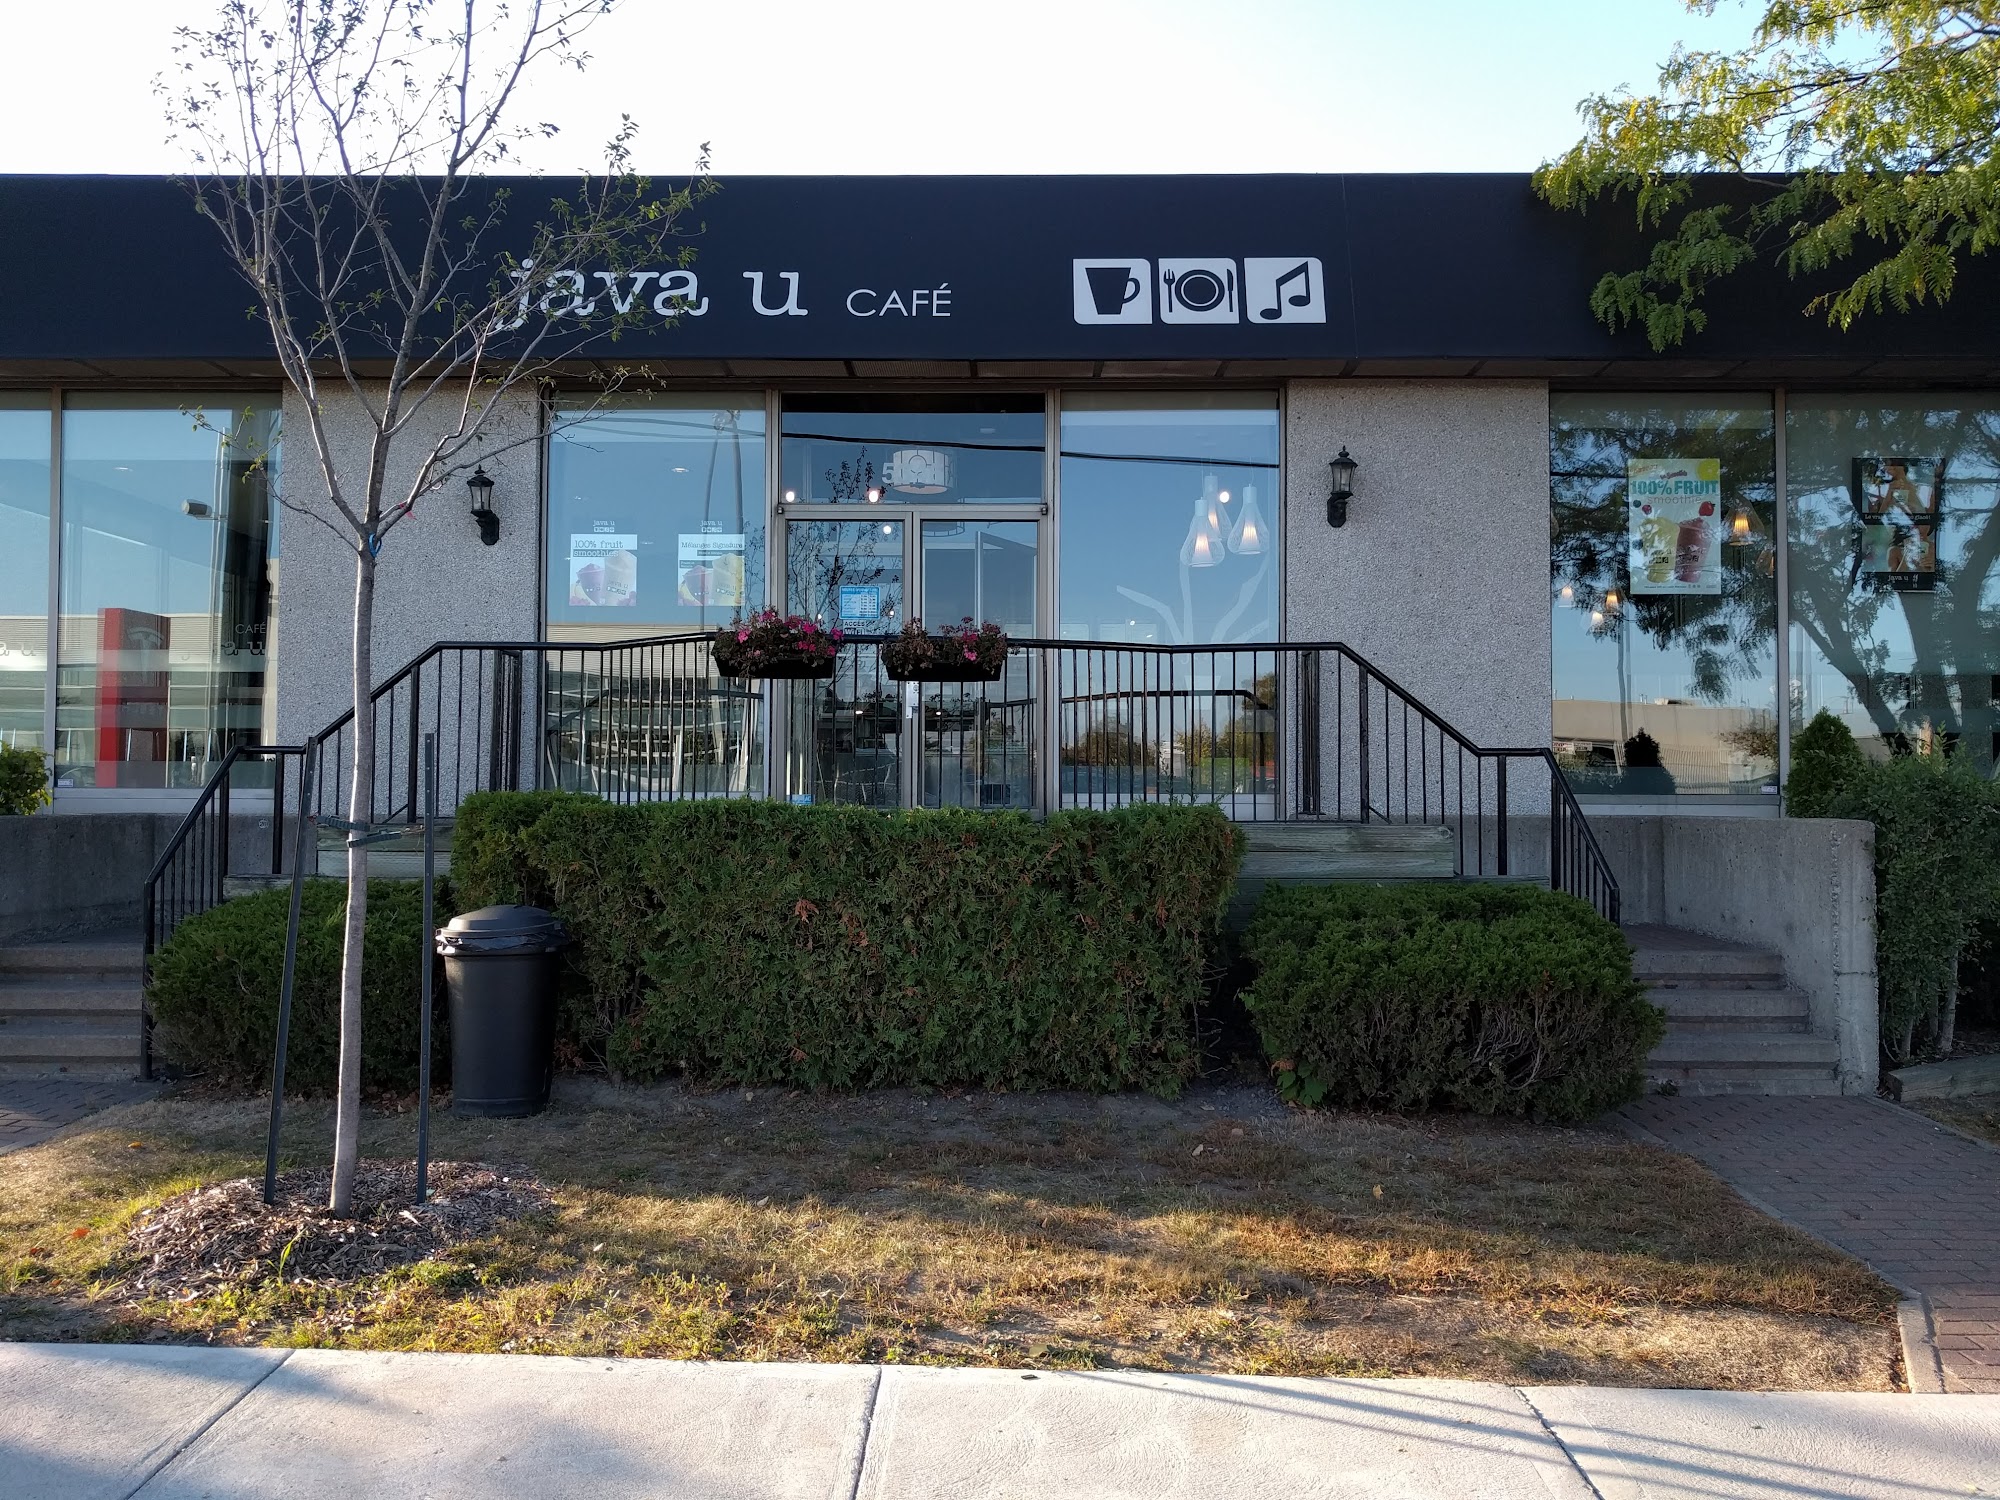 Java-U Cafe